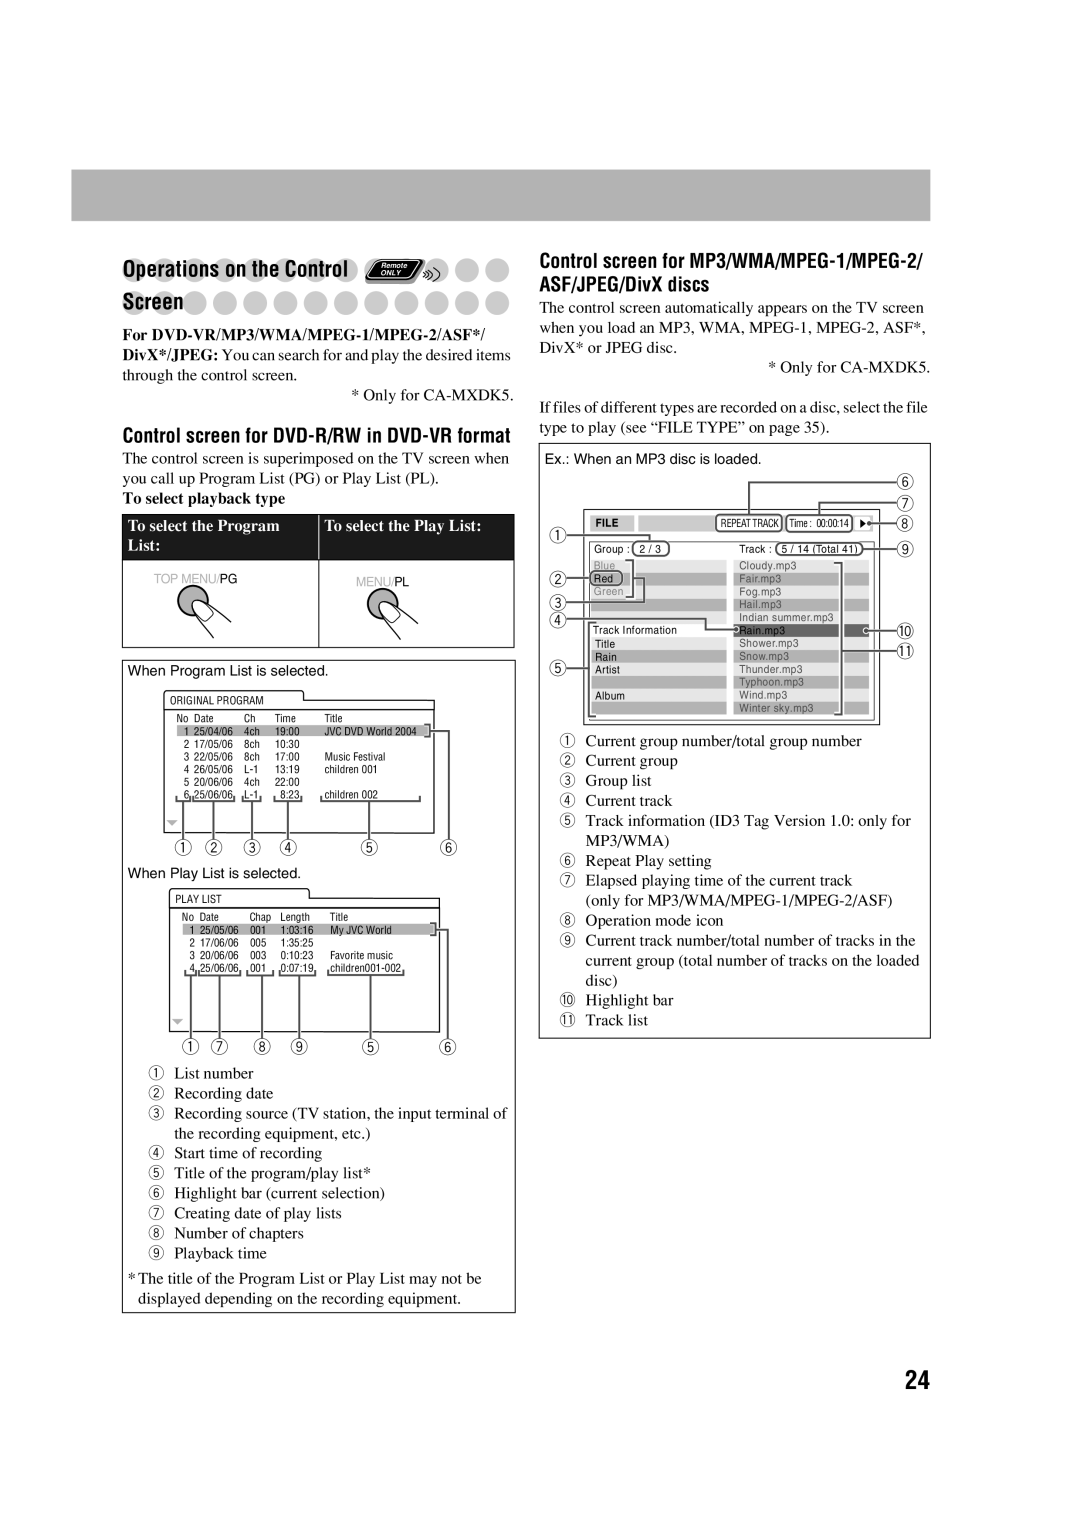 JVC MX-DK3, MX-DK15 manual Screen, Operations on the Control, Control screen for DVD-R/RWin DVD-VRformat 